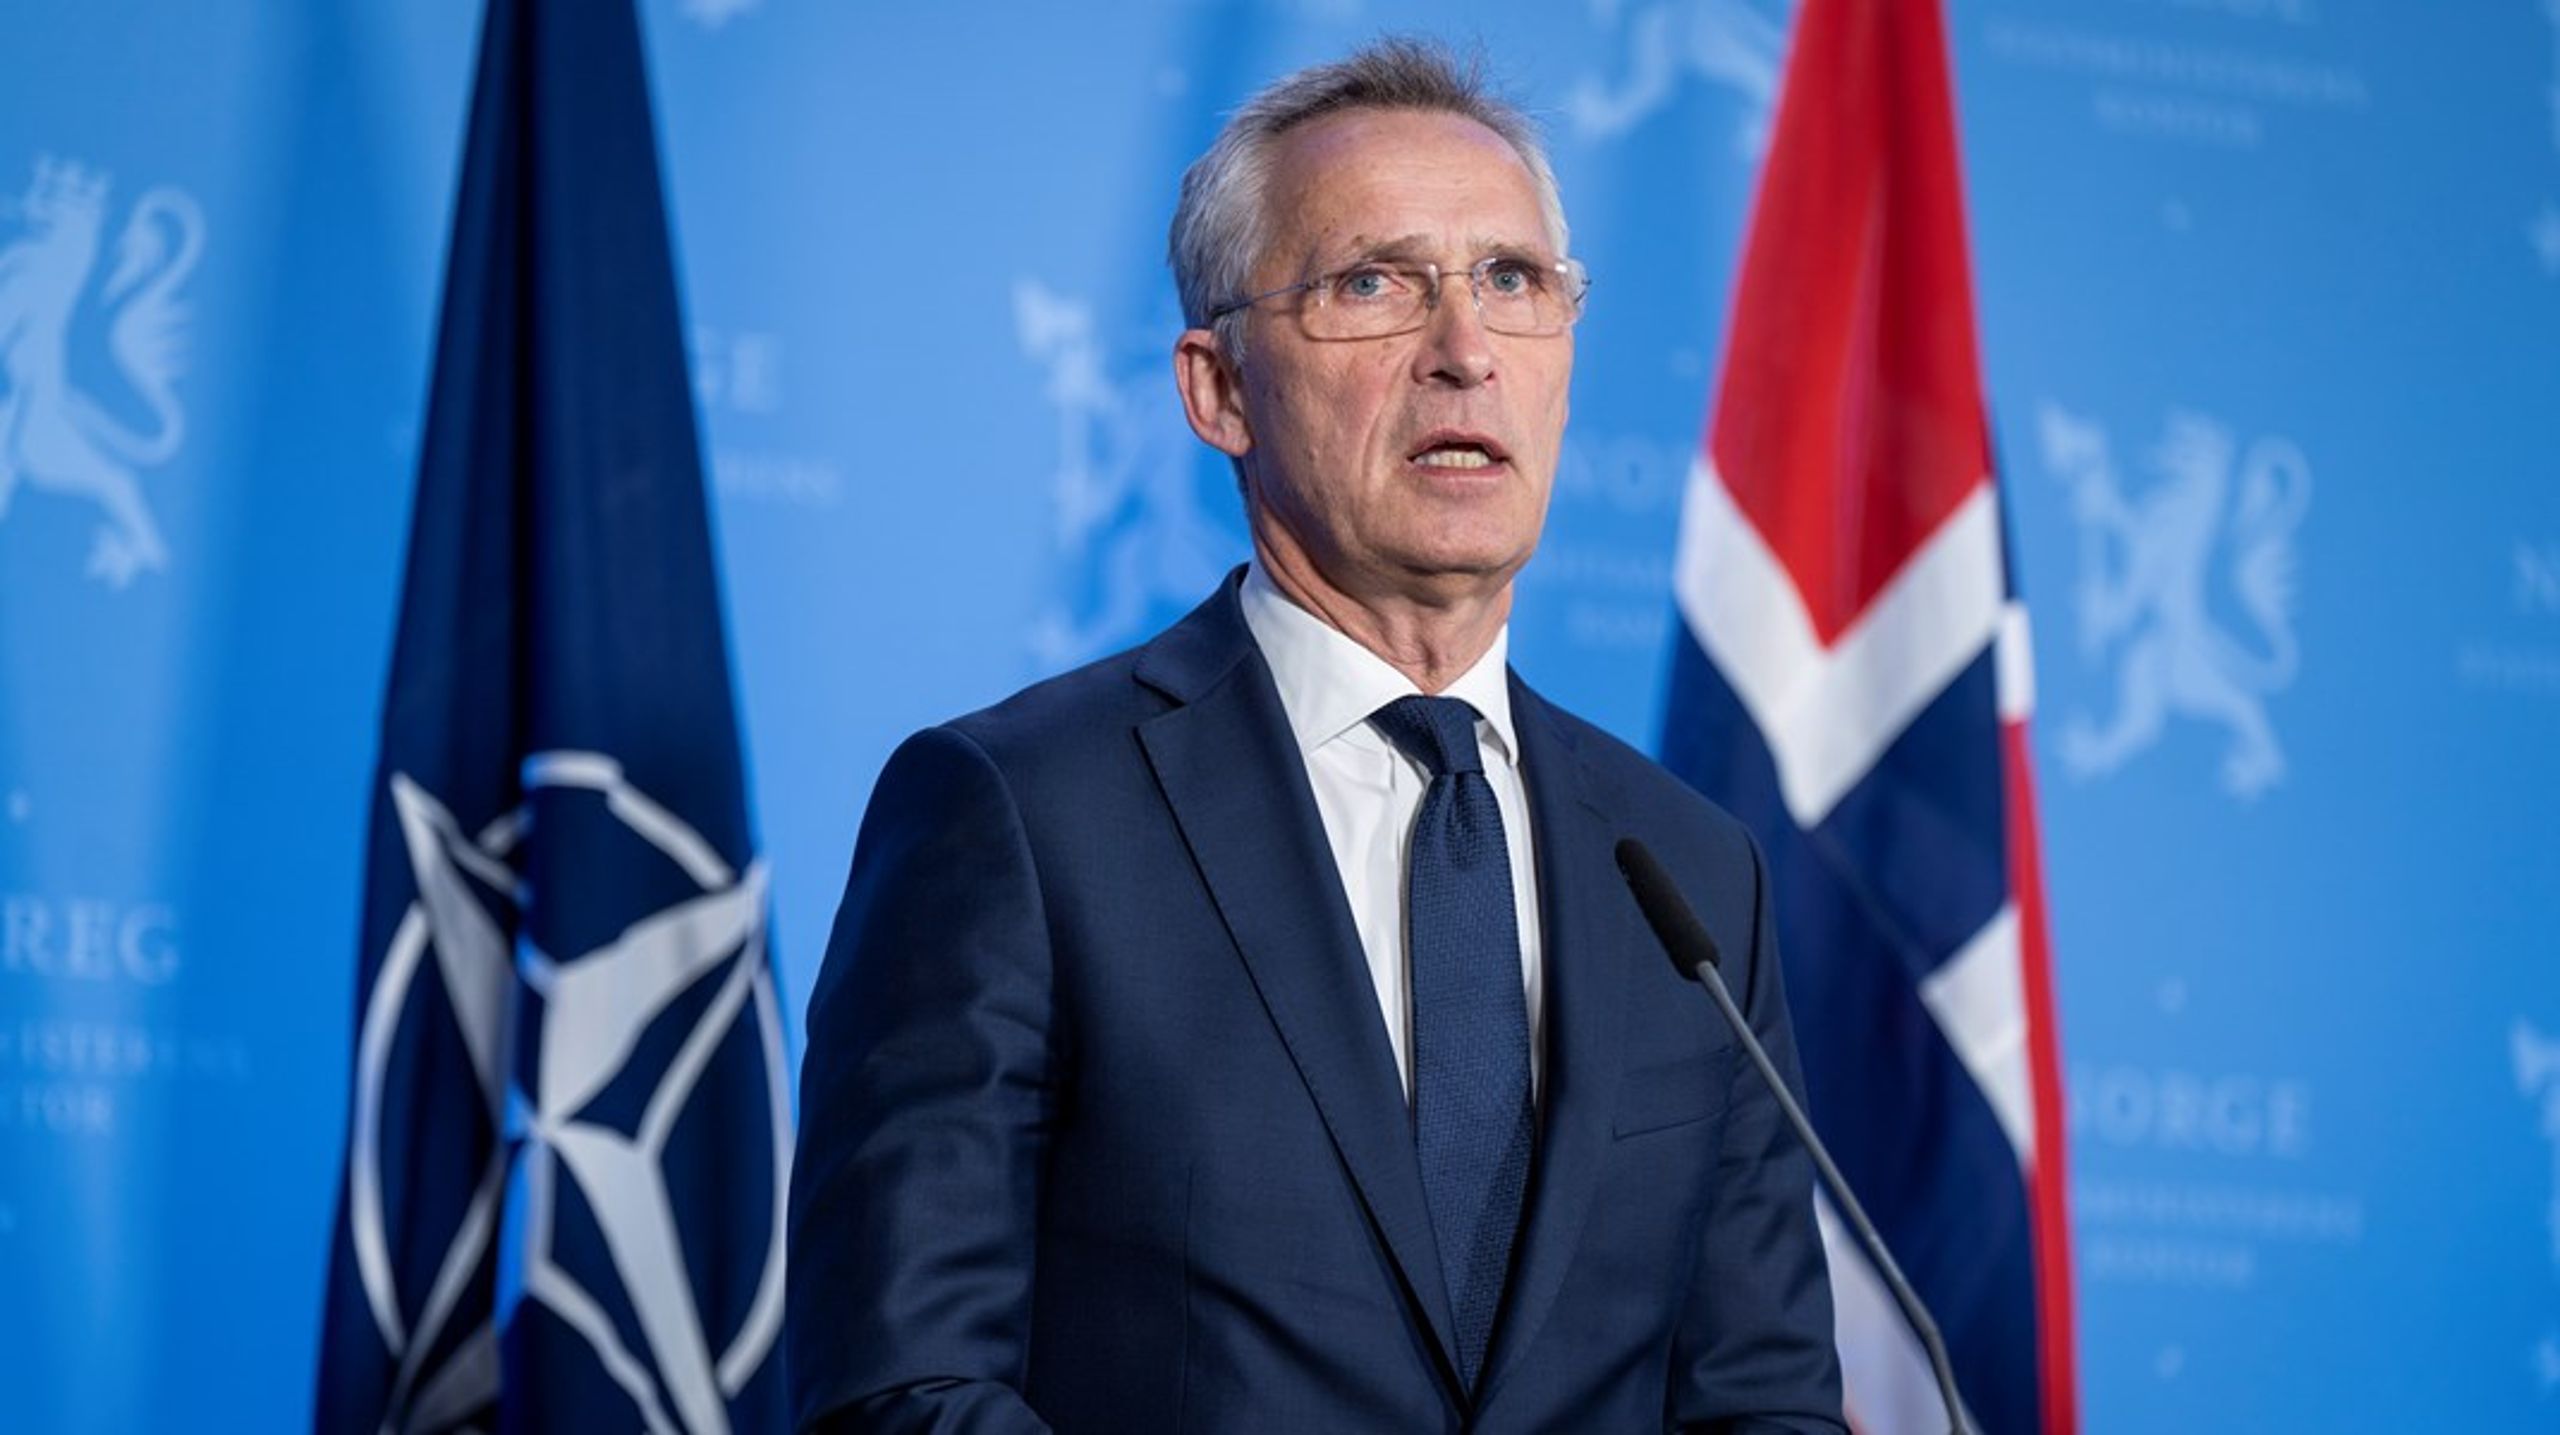 Nato-sjef
Jens Stoltenberg er på besøk i Norge i forbindelse med Natos uformelle
utenriksministermøte i Oslo.